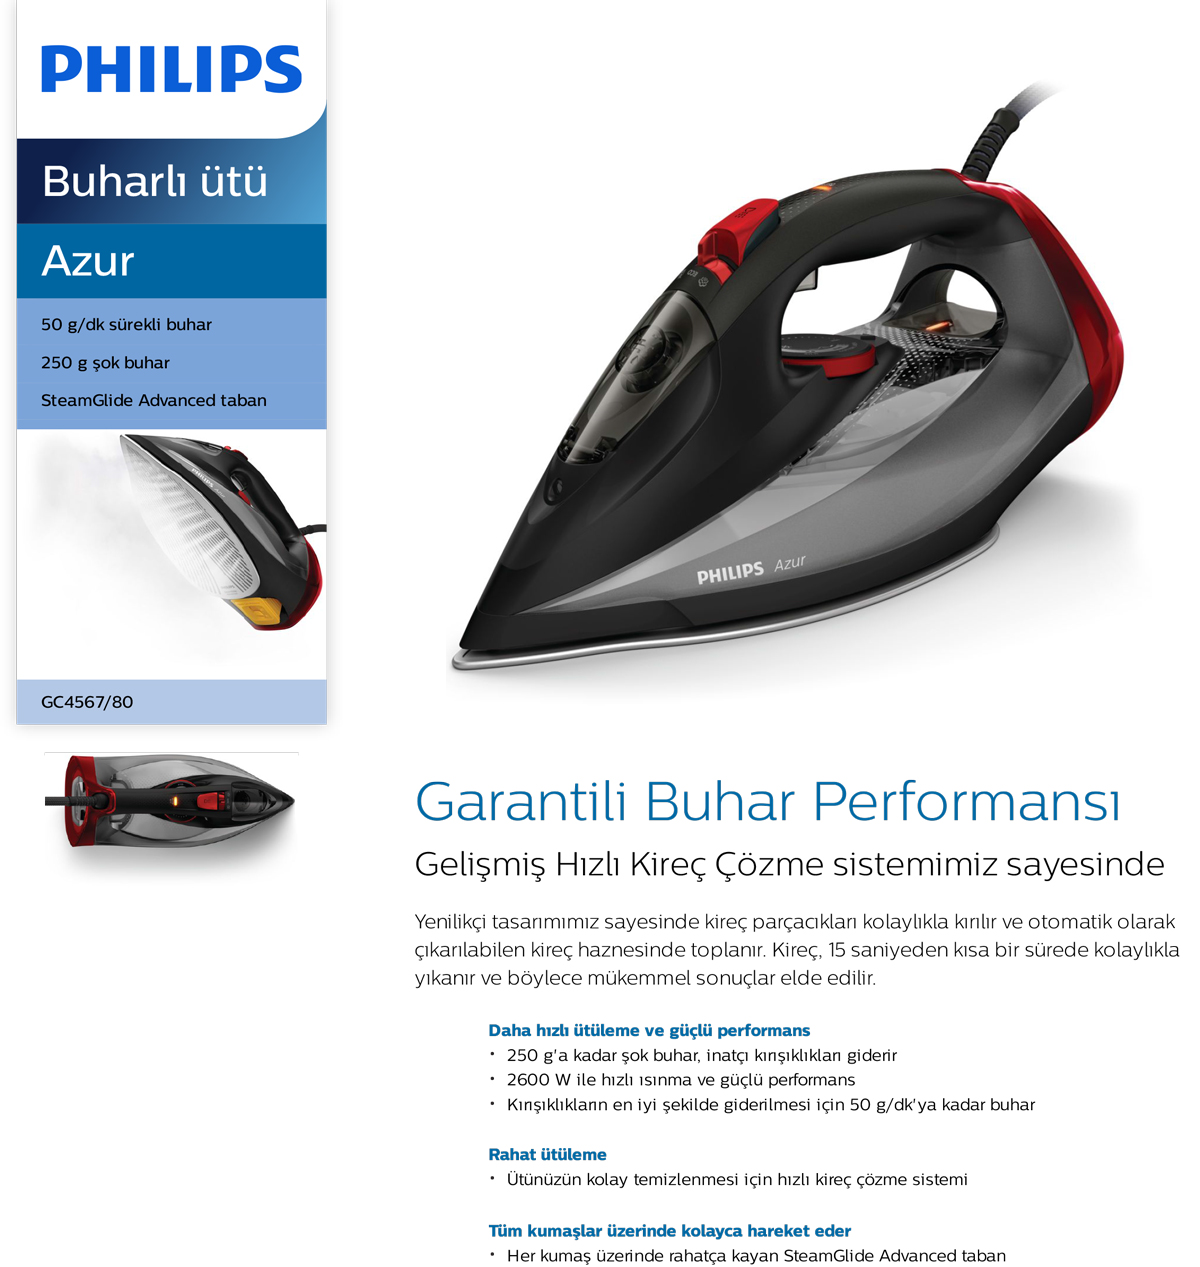 Philips azur gc4567. Philips gc4567/80 Azur. Утюг Philips gc4567, 80. Утюг Philips Azur gc4567/80, черный. Philips Azur 4567.